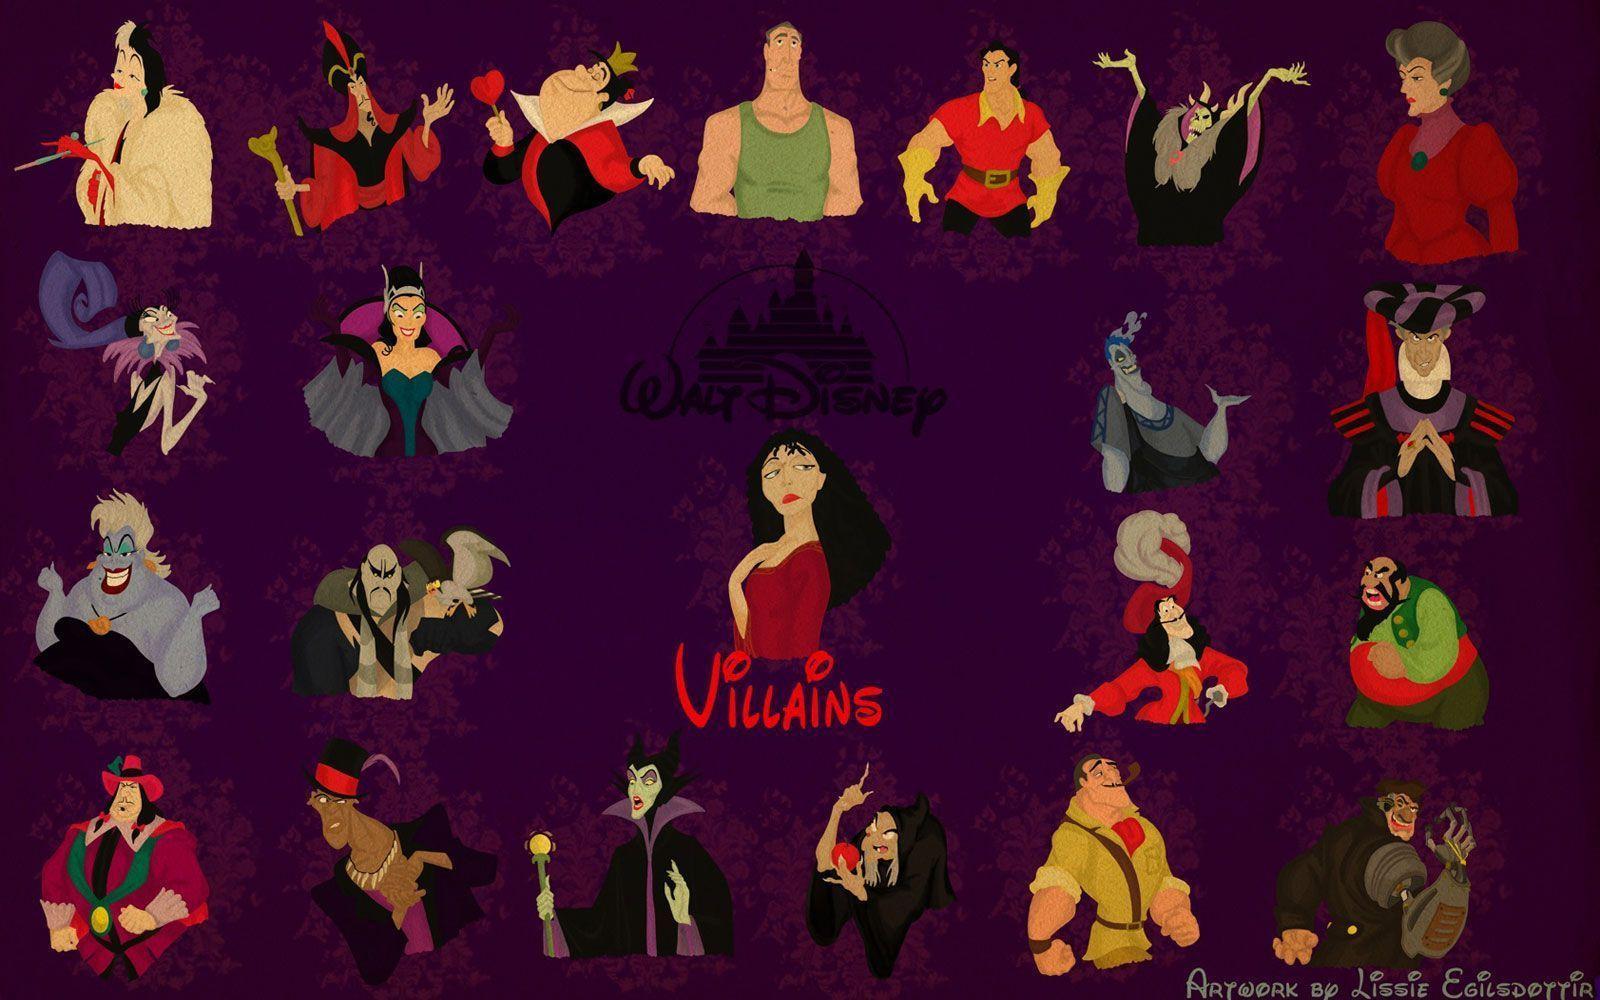 Disney Evil Characters Wallpaper